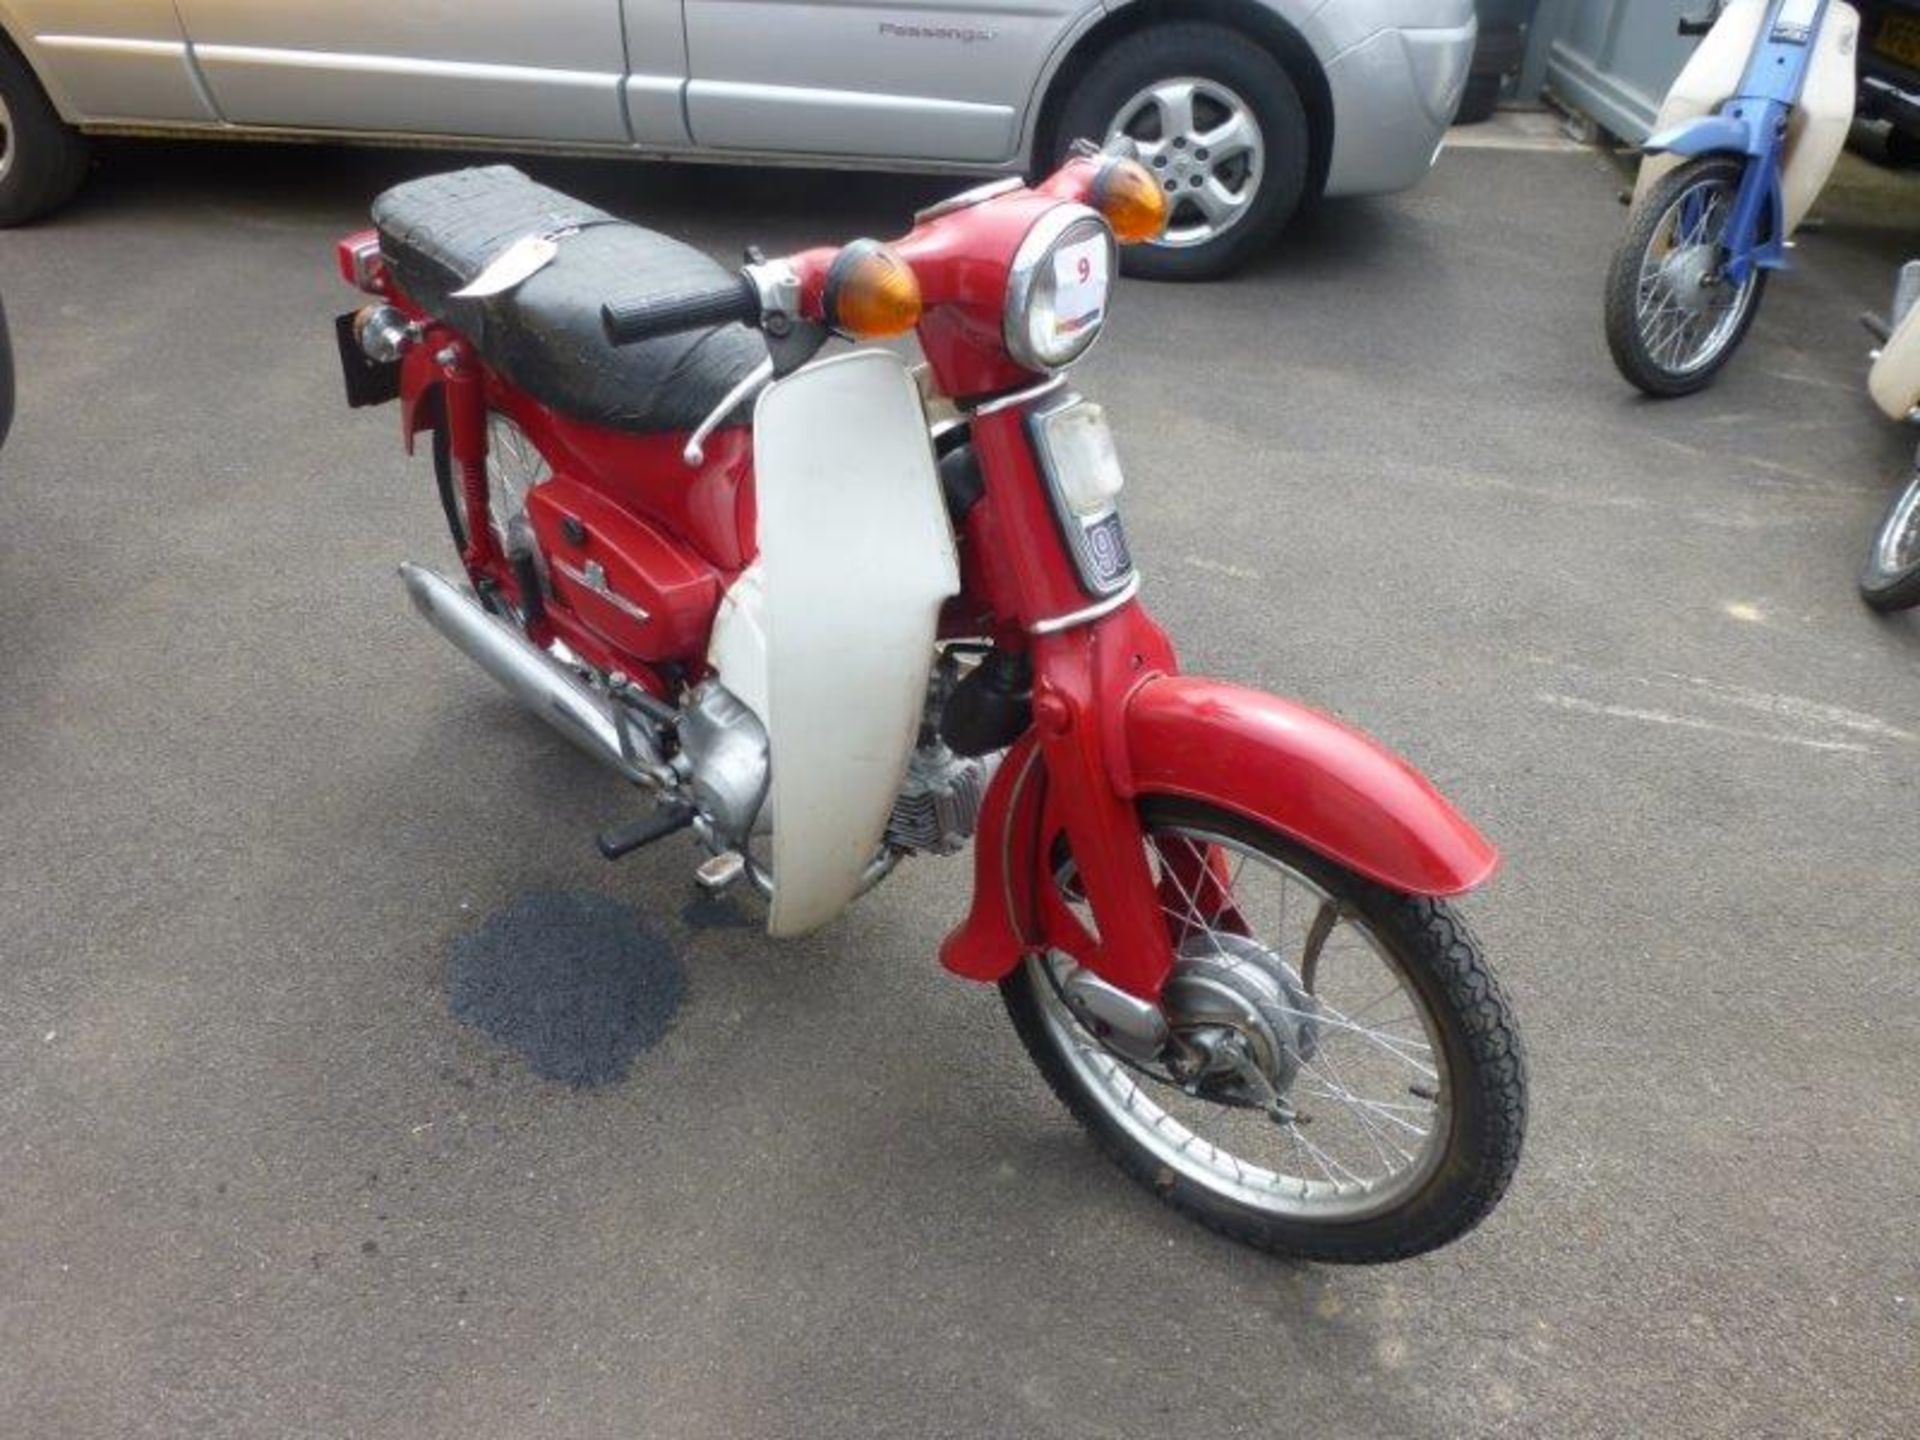 Honda C90 Step Through motorcycle, 90cc (Red)  Registration no. RGP 55V  VIN no. C905160187  Date of - Image 2 of 4